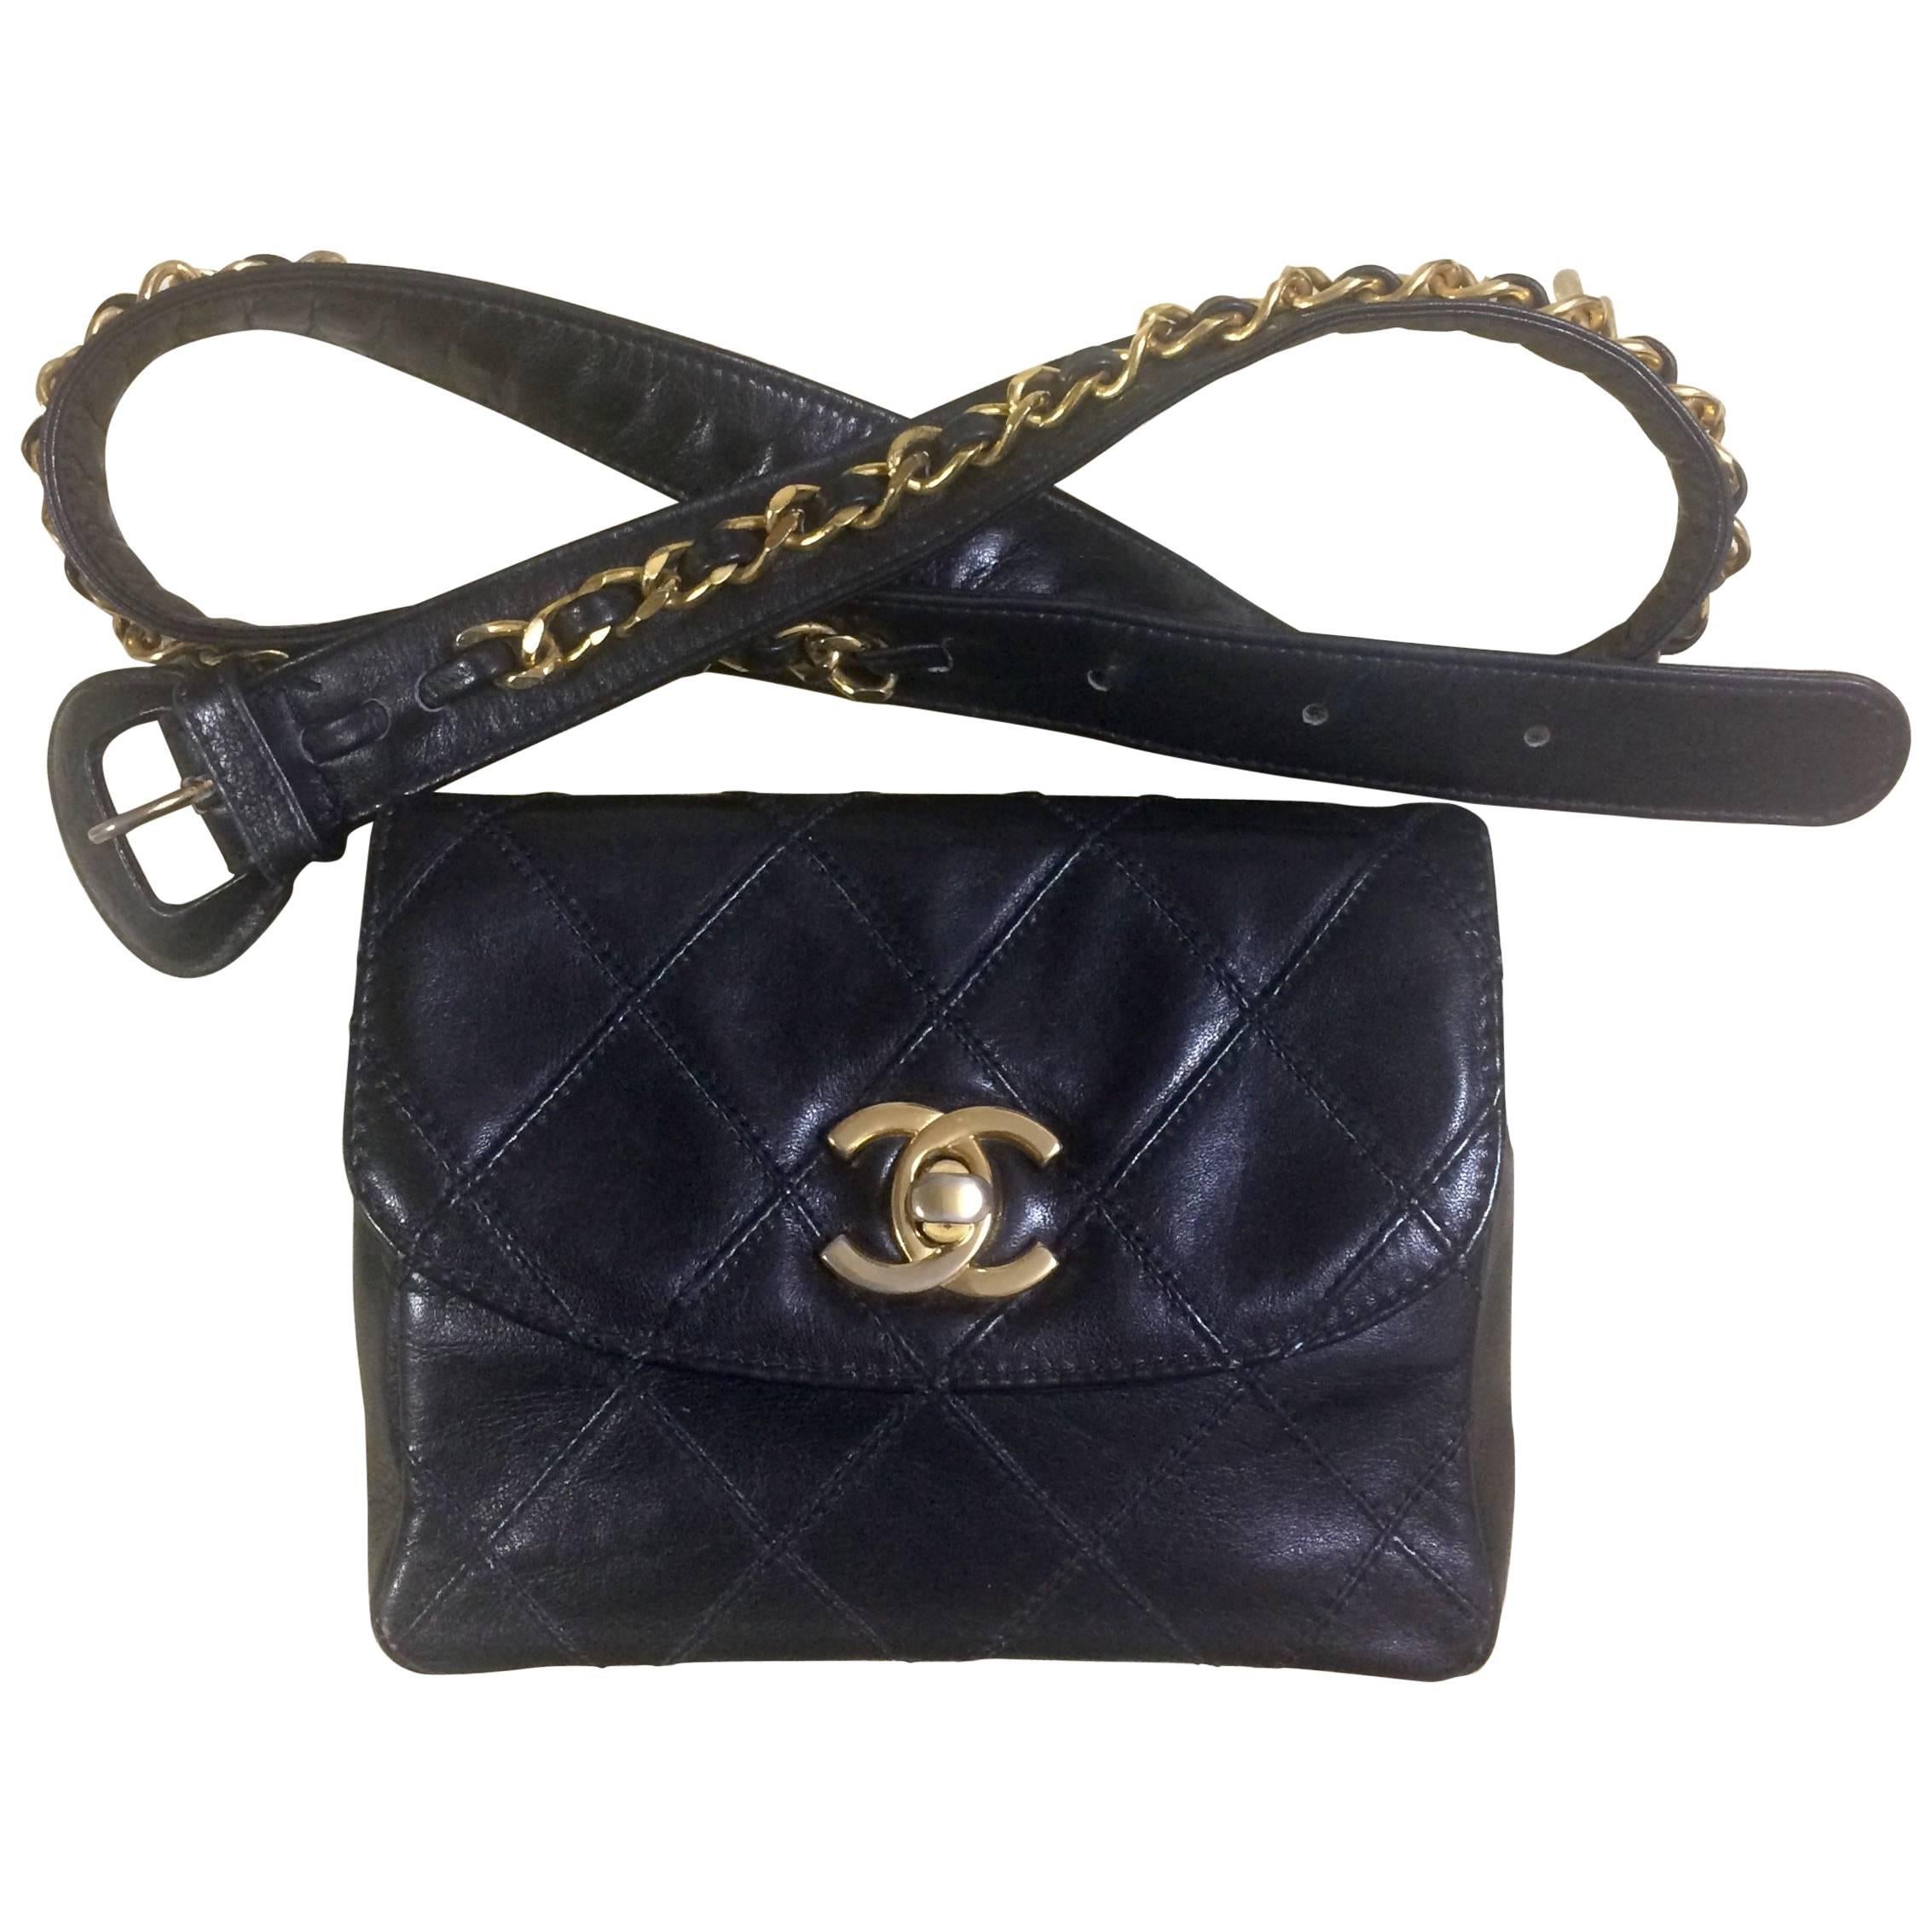 Vintage CHANEL black leather 2.55 waist purse, fanny bag with golden chain belt.